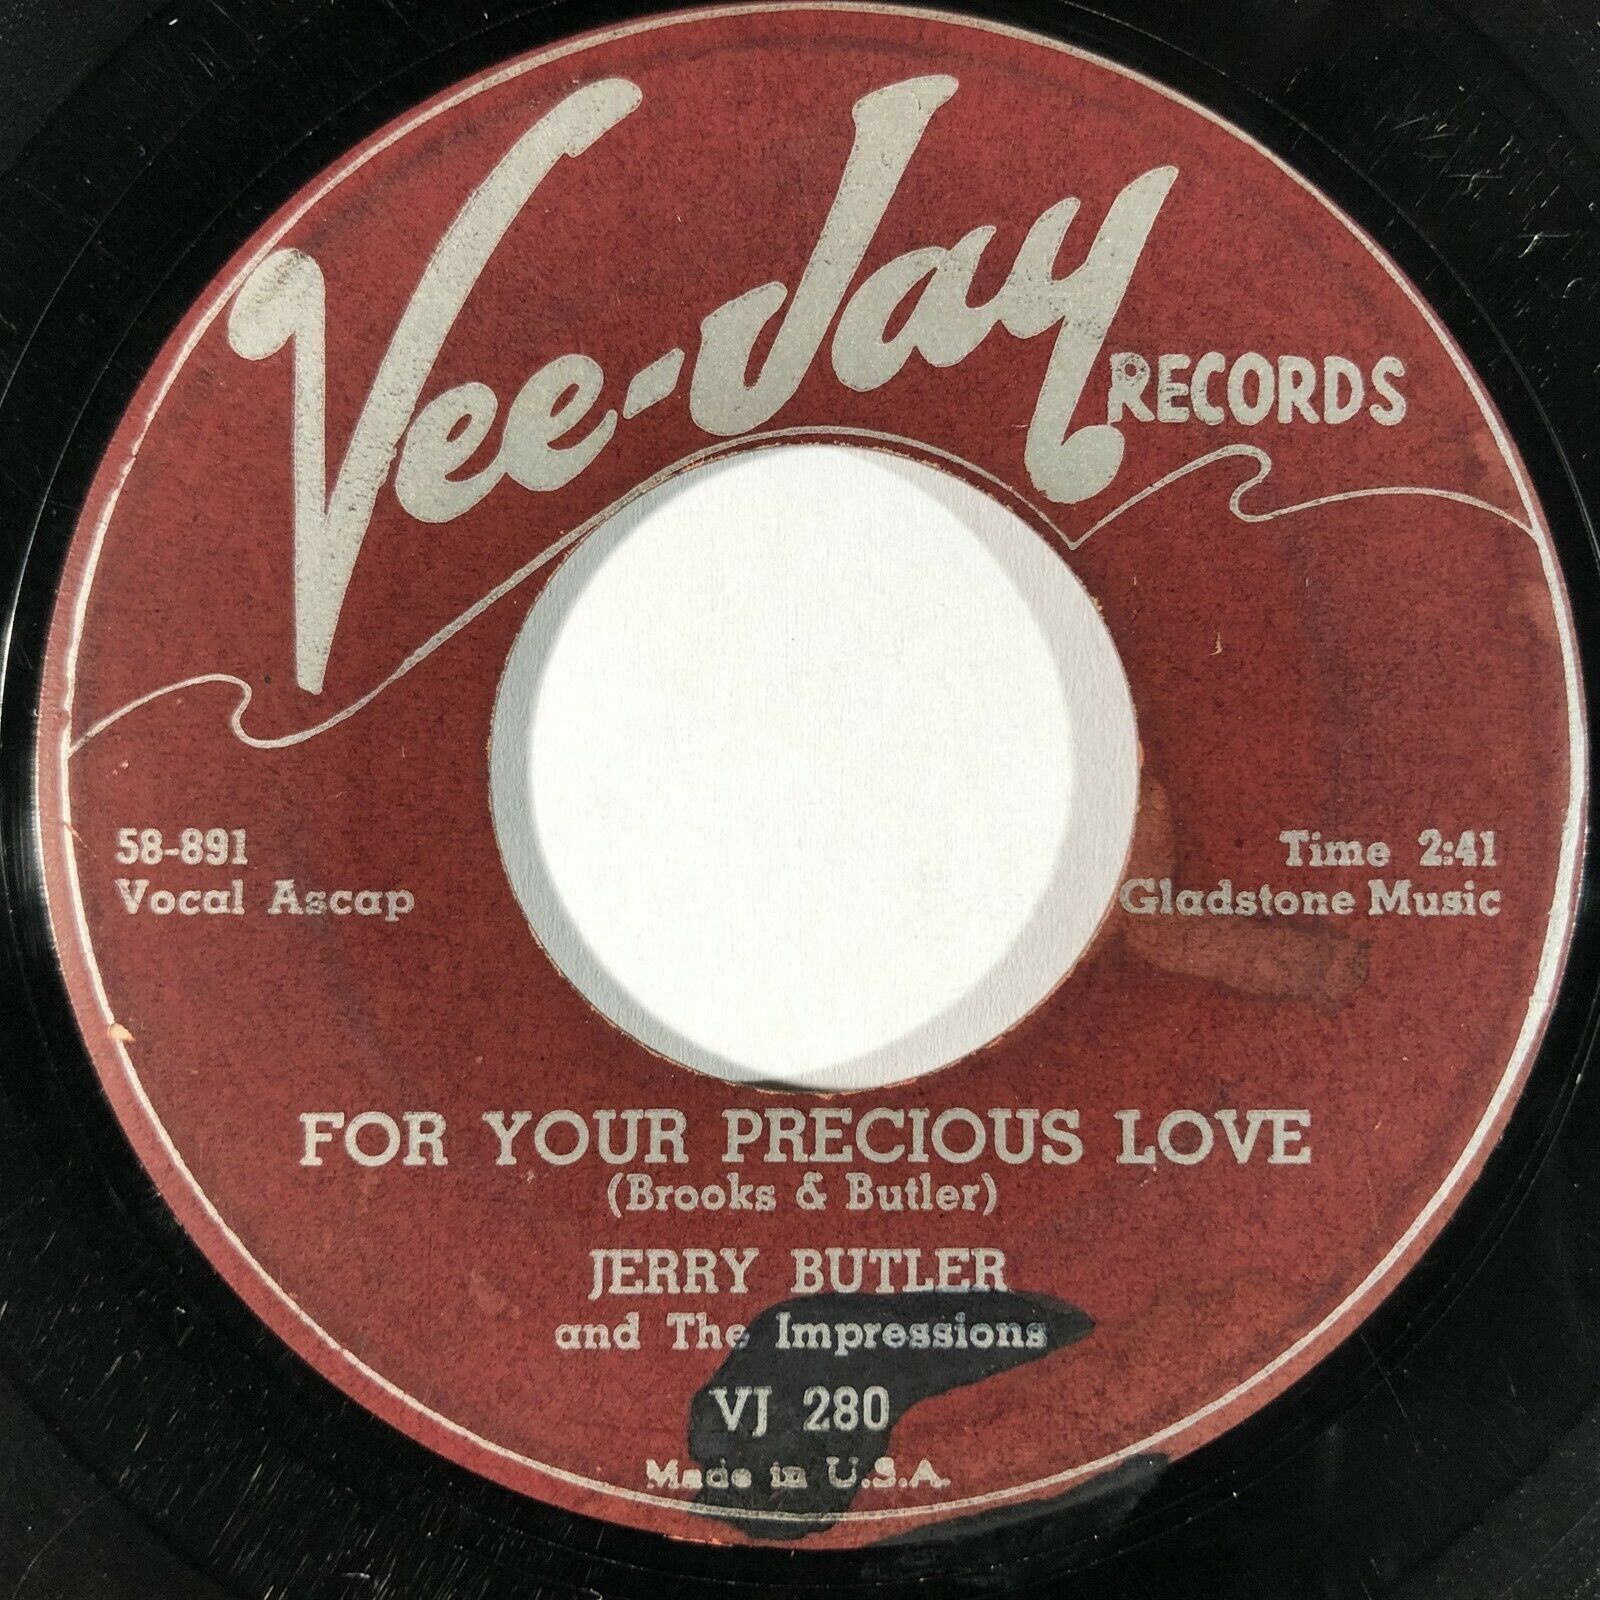 JERRY BUTLER For Your Precious Love Vee Jay 280 Doo Wop R&B ORIGINAL 45 HEAR